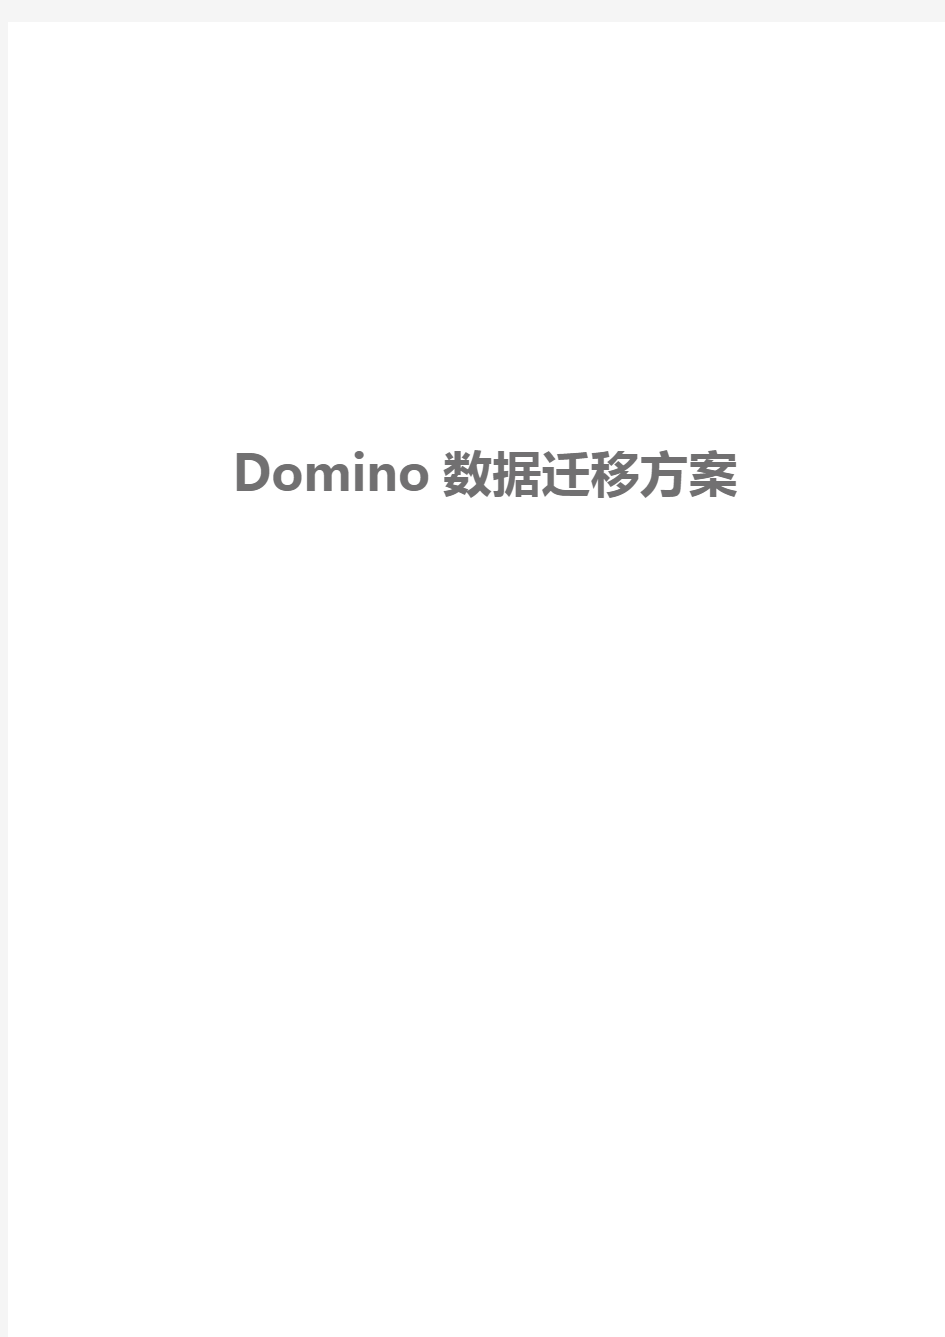 Domino数据迁移方案